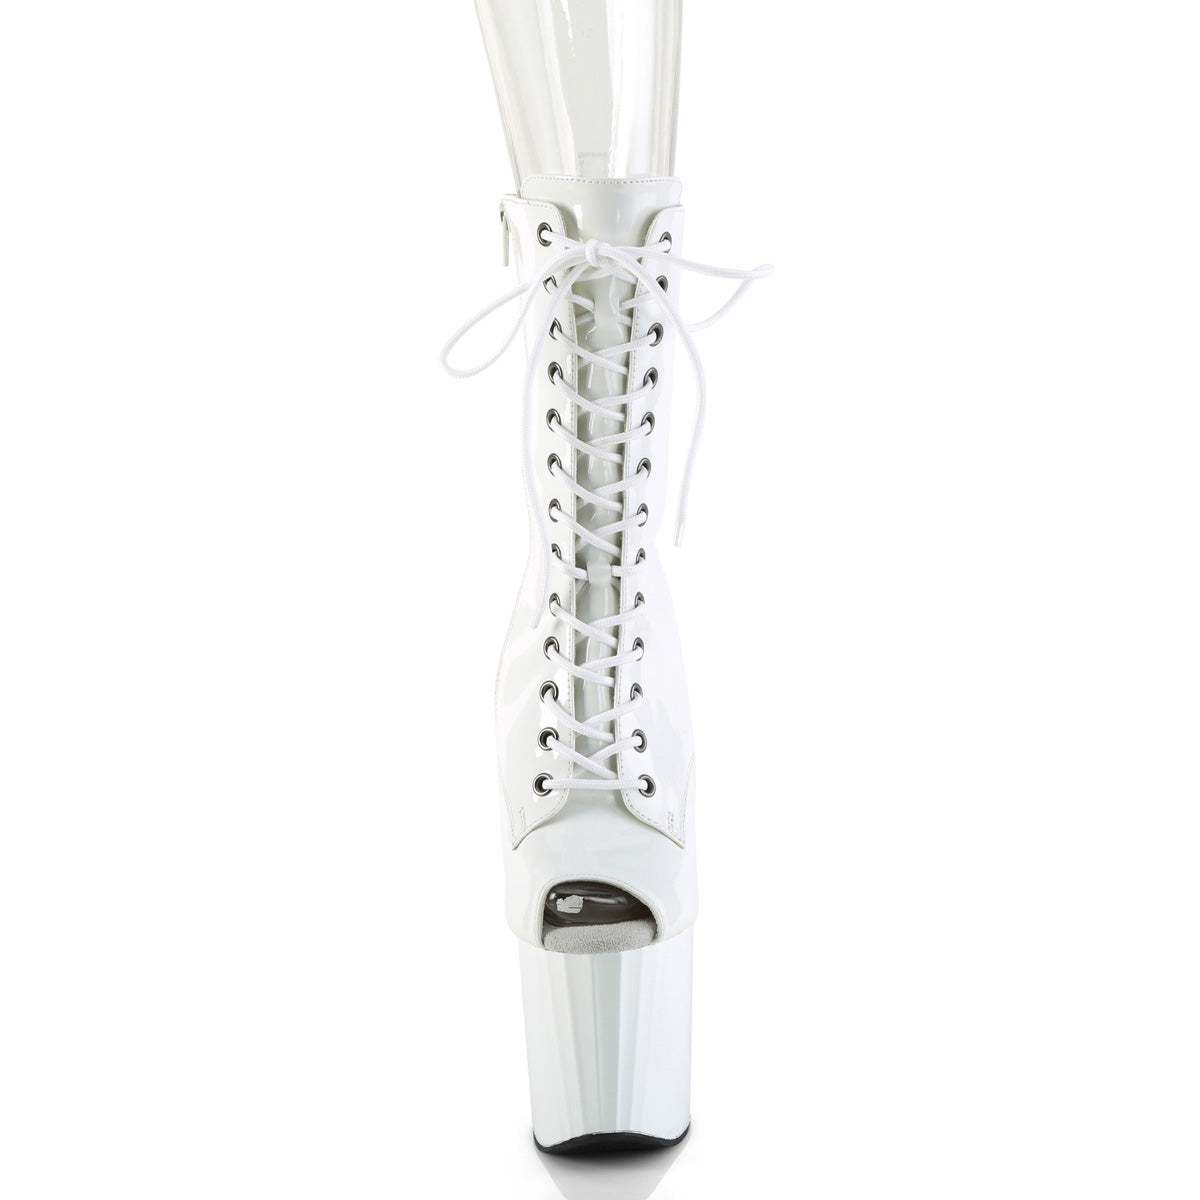 ENCHANT-1041 Pleaser White Lace Up Pole Dance Ankle Boots